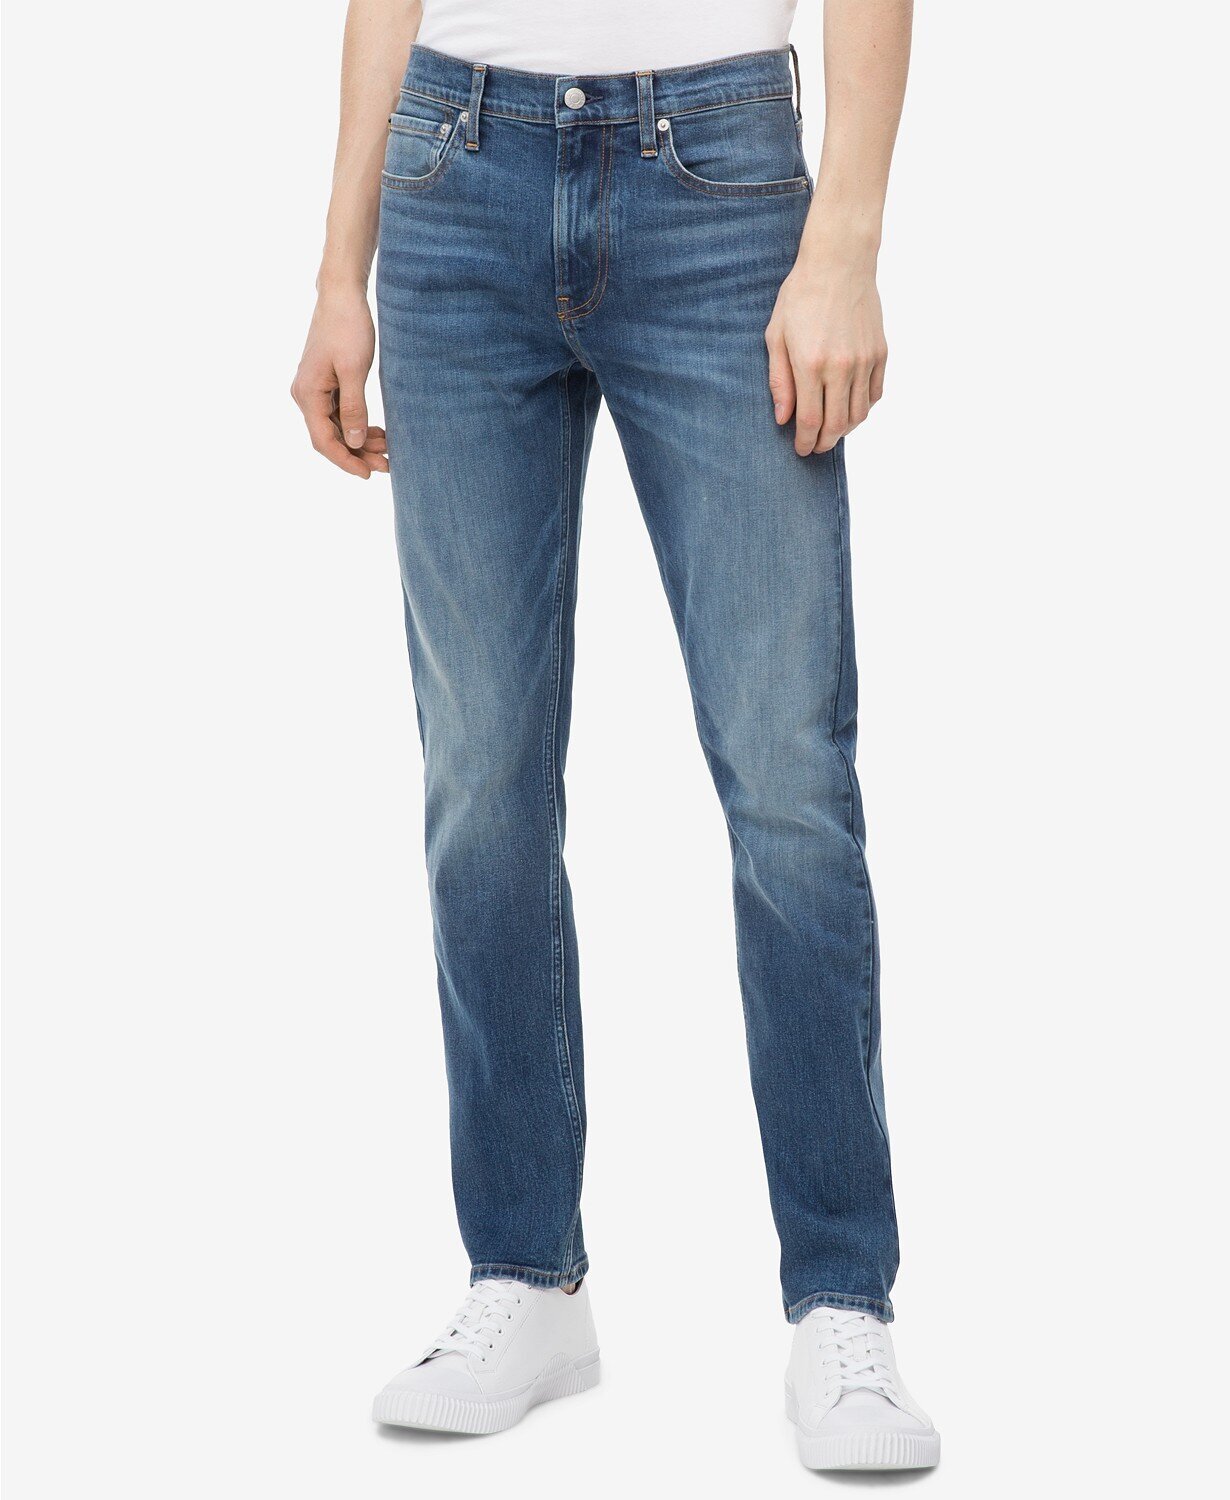 paige jeans macys